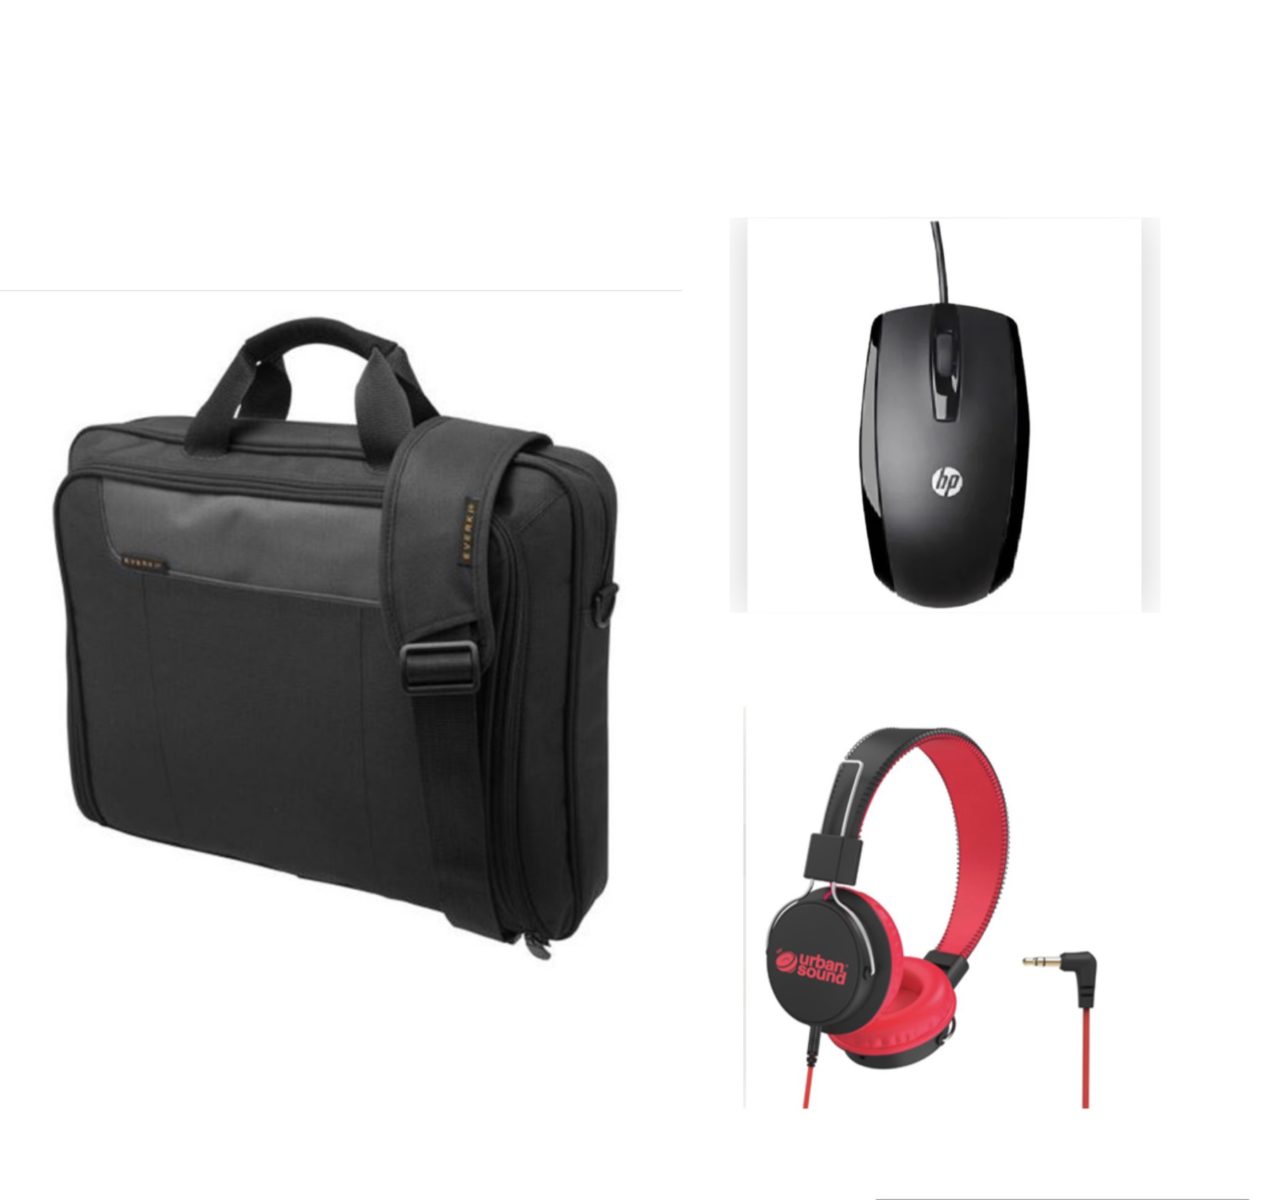 New Bundle | Advanced Everki Laptop Bag Plus New Verbatim Head Set Plus New HP X500 Mouse